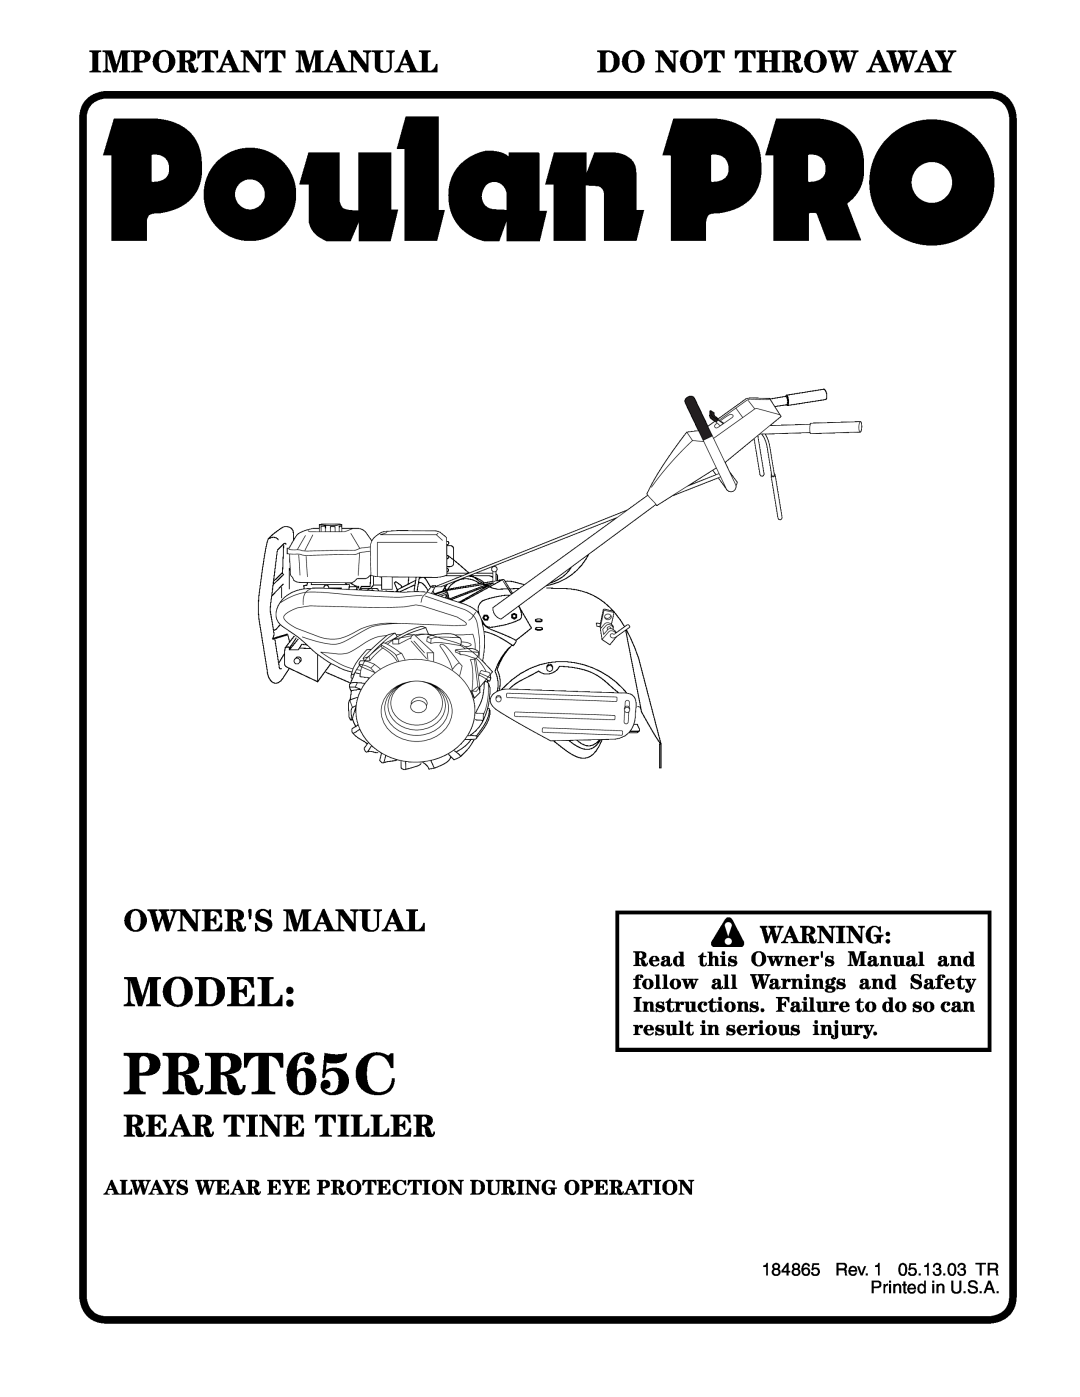 Poulan PRRT65C owner manual Model, Important Manual, Owners Manual, Rear Tine Tiller, Do Not Throw Away 